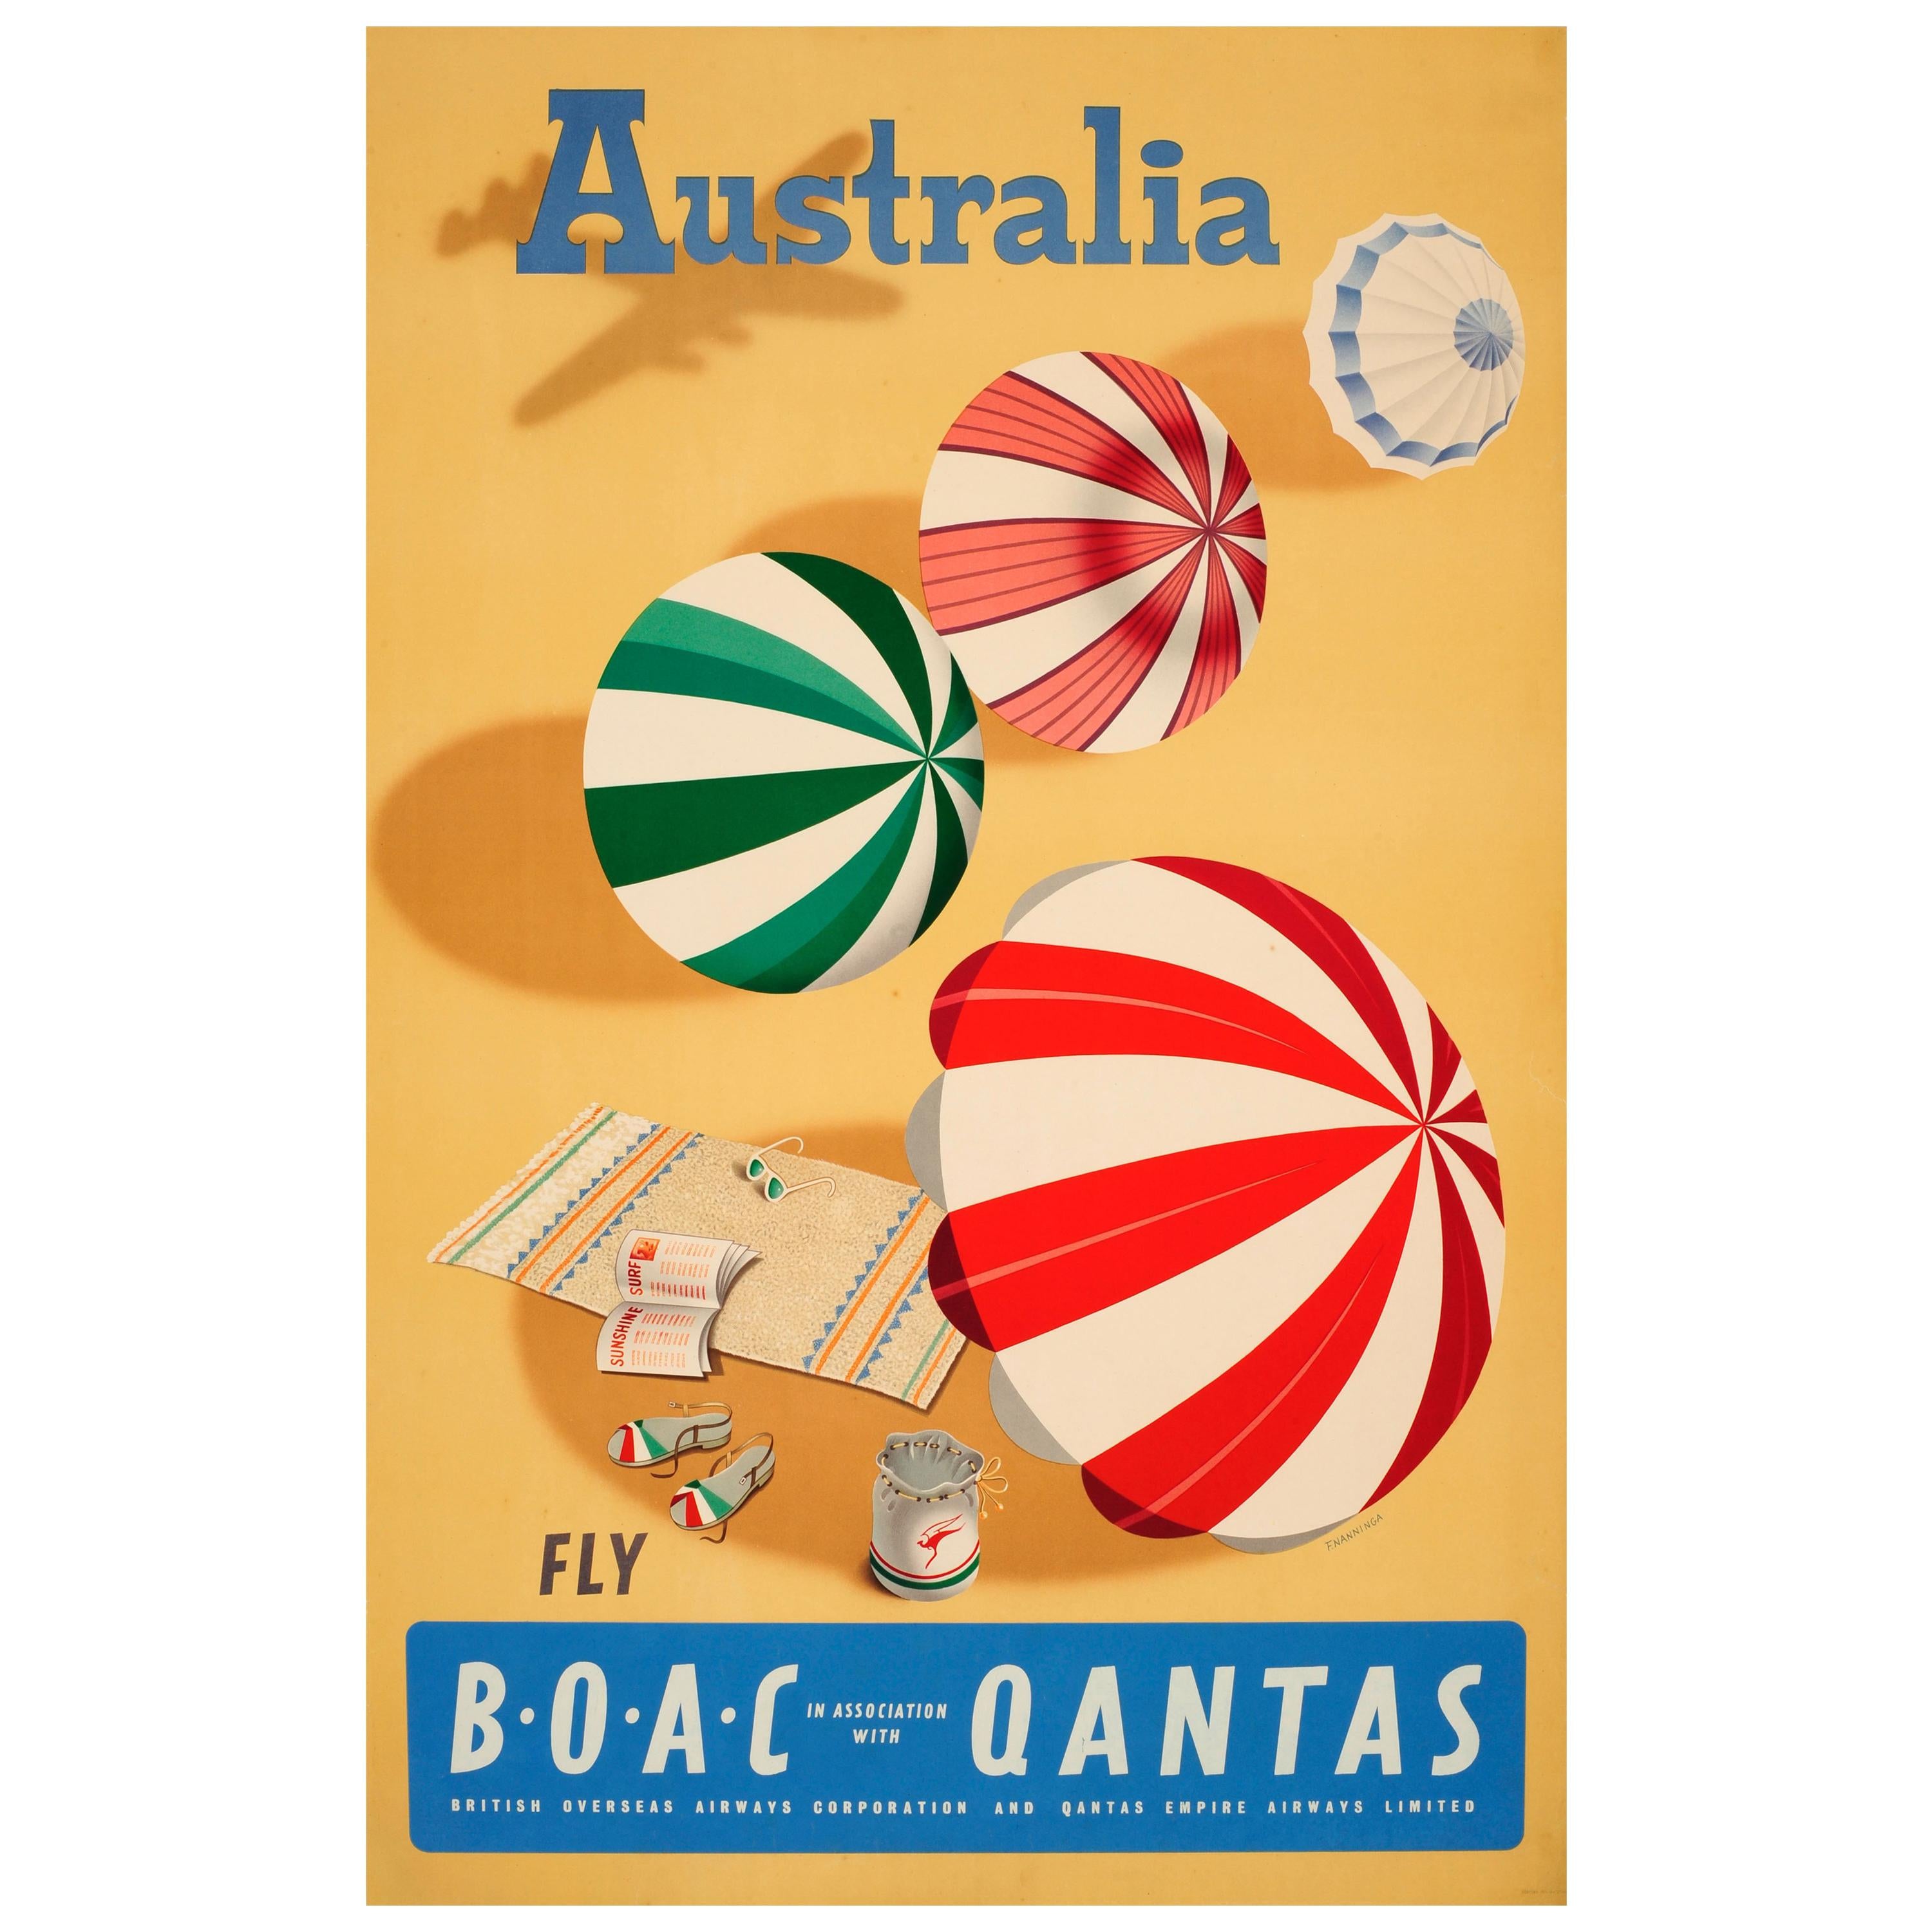 Original Vintage Travel Poster For Australia Fly BOAC & Qantas - Sunshine & Surf